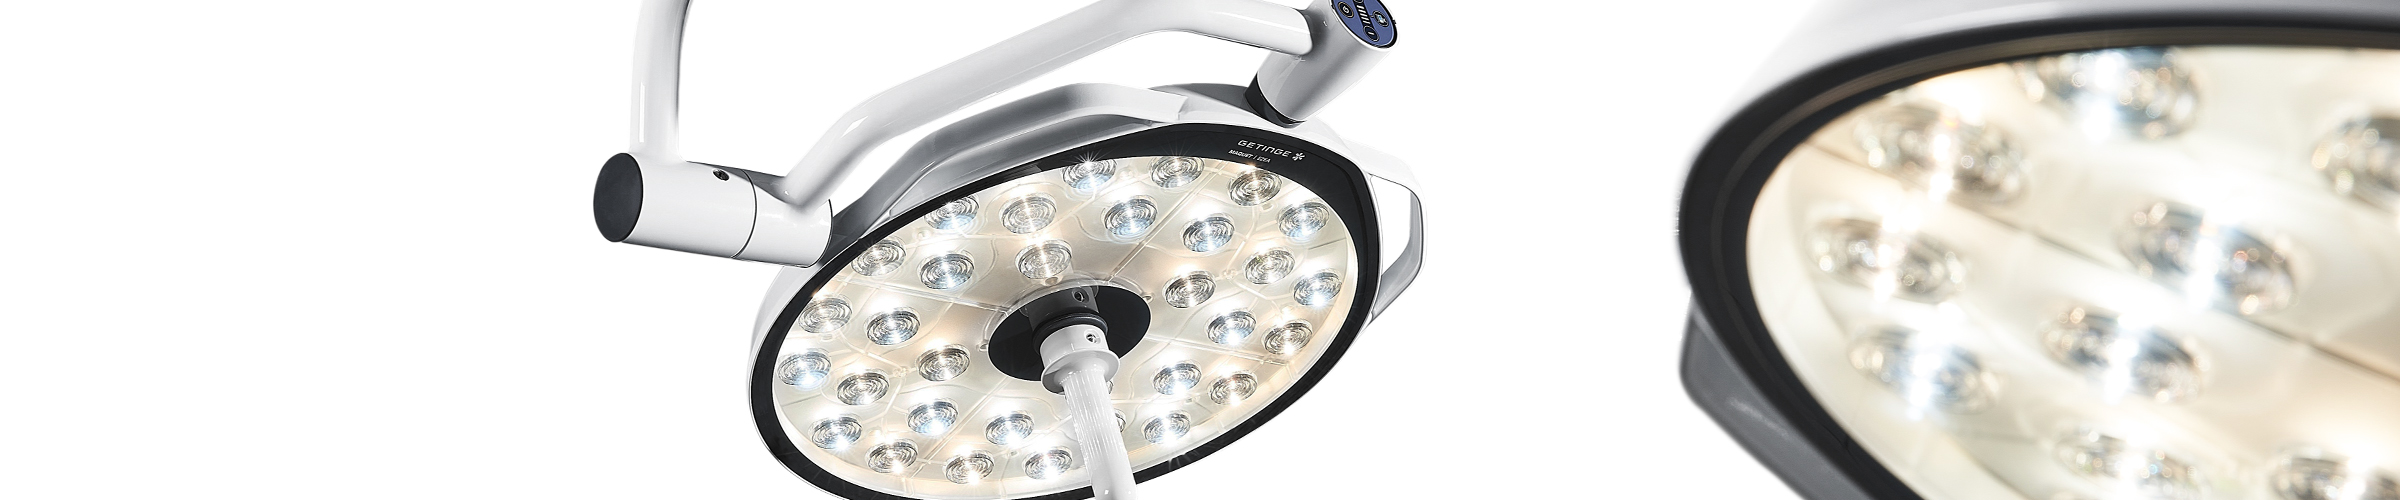  Maquet Ezea Surgical Light combines easy handling and effortless maneuvering